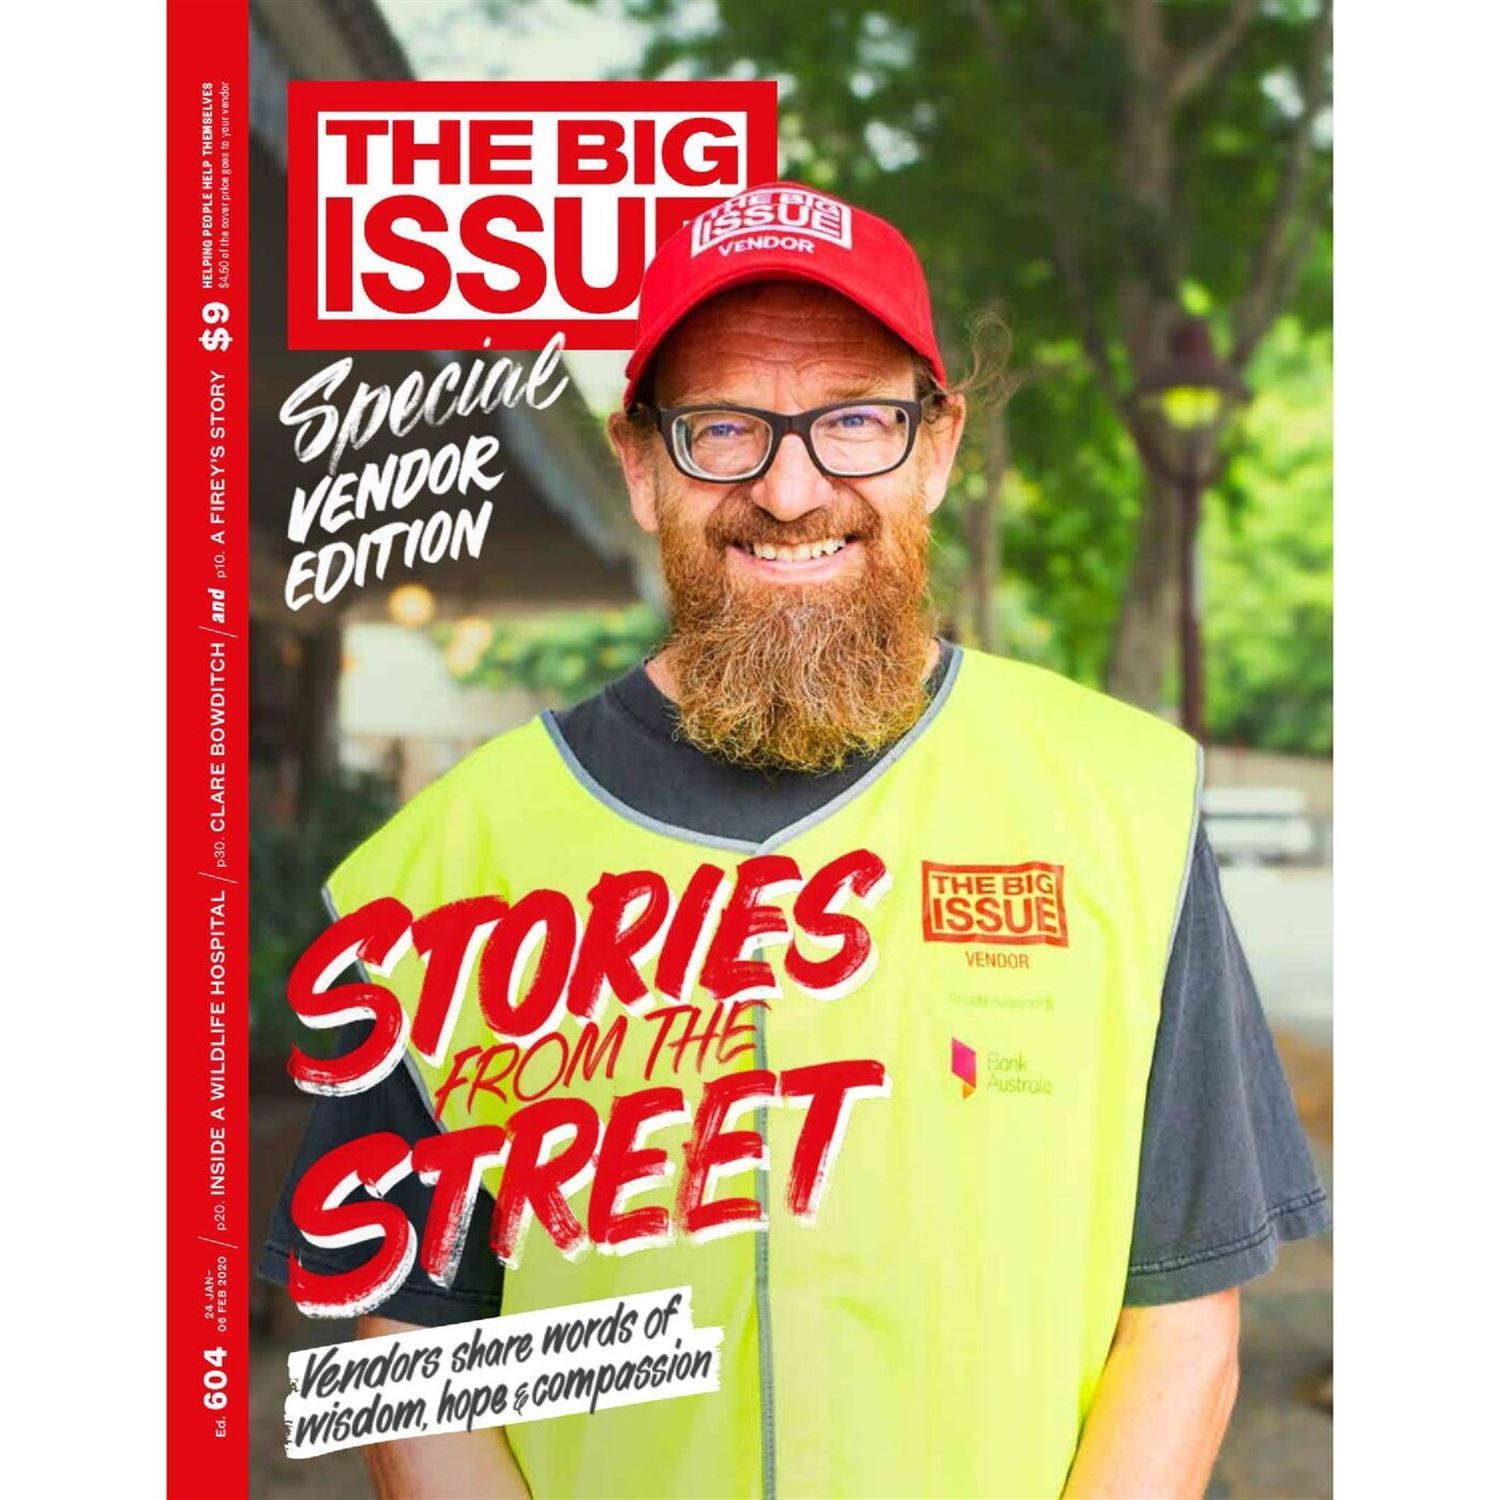 The Big Issue magazine